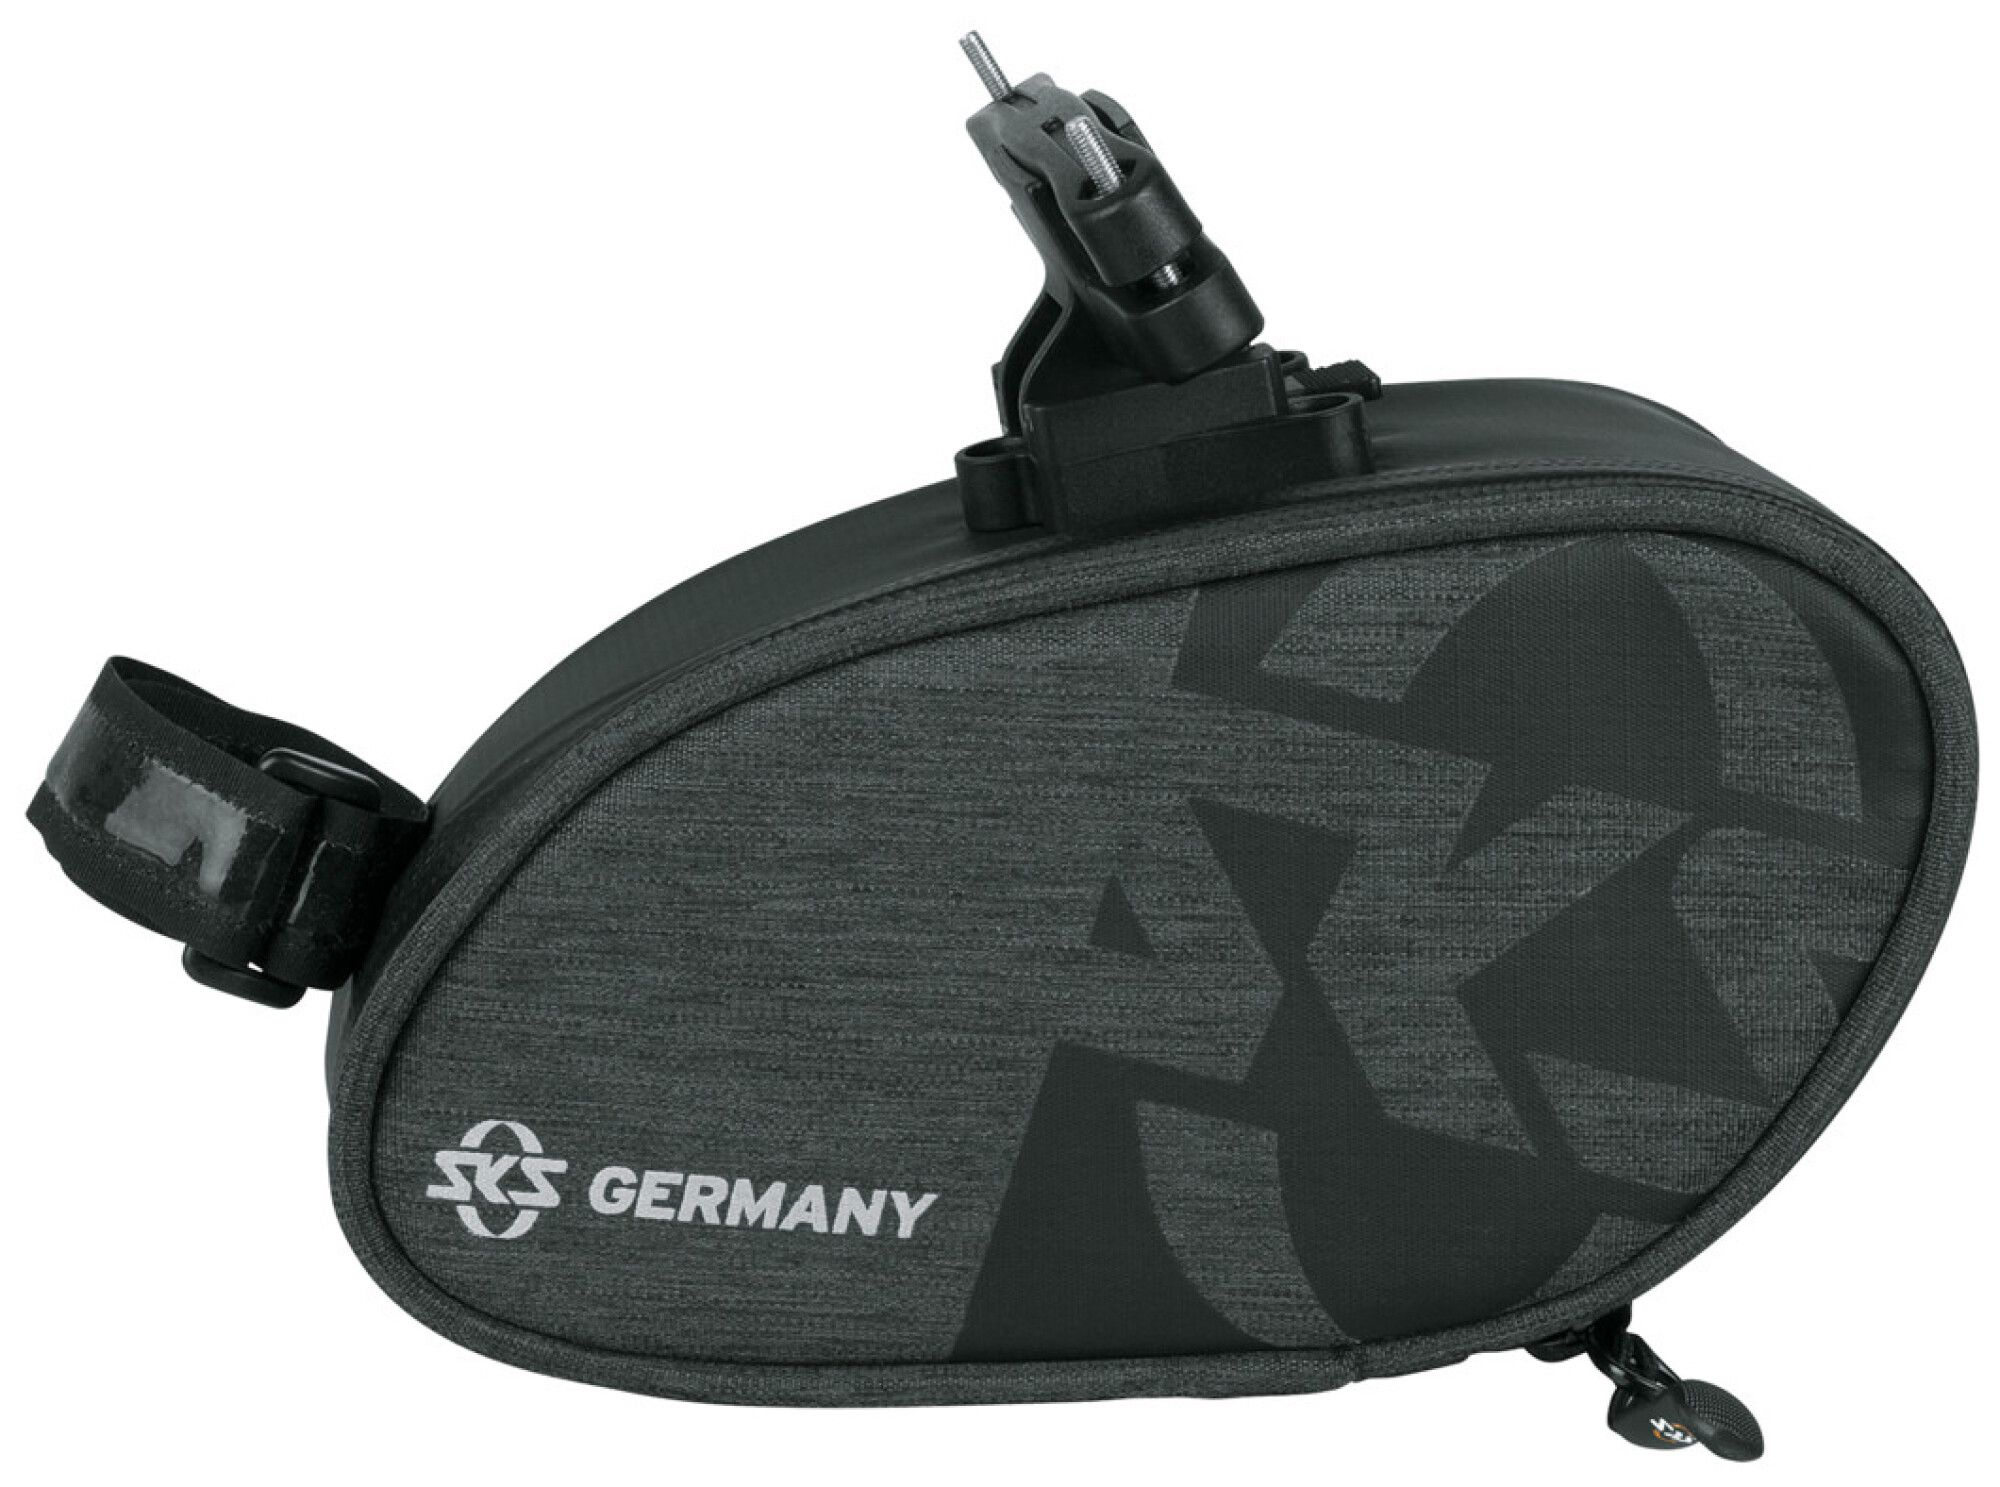 SKS Germany TRAVELLER CLICK 800 (Bild 2)